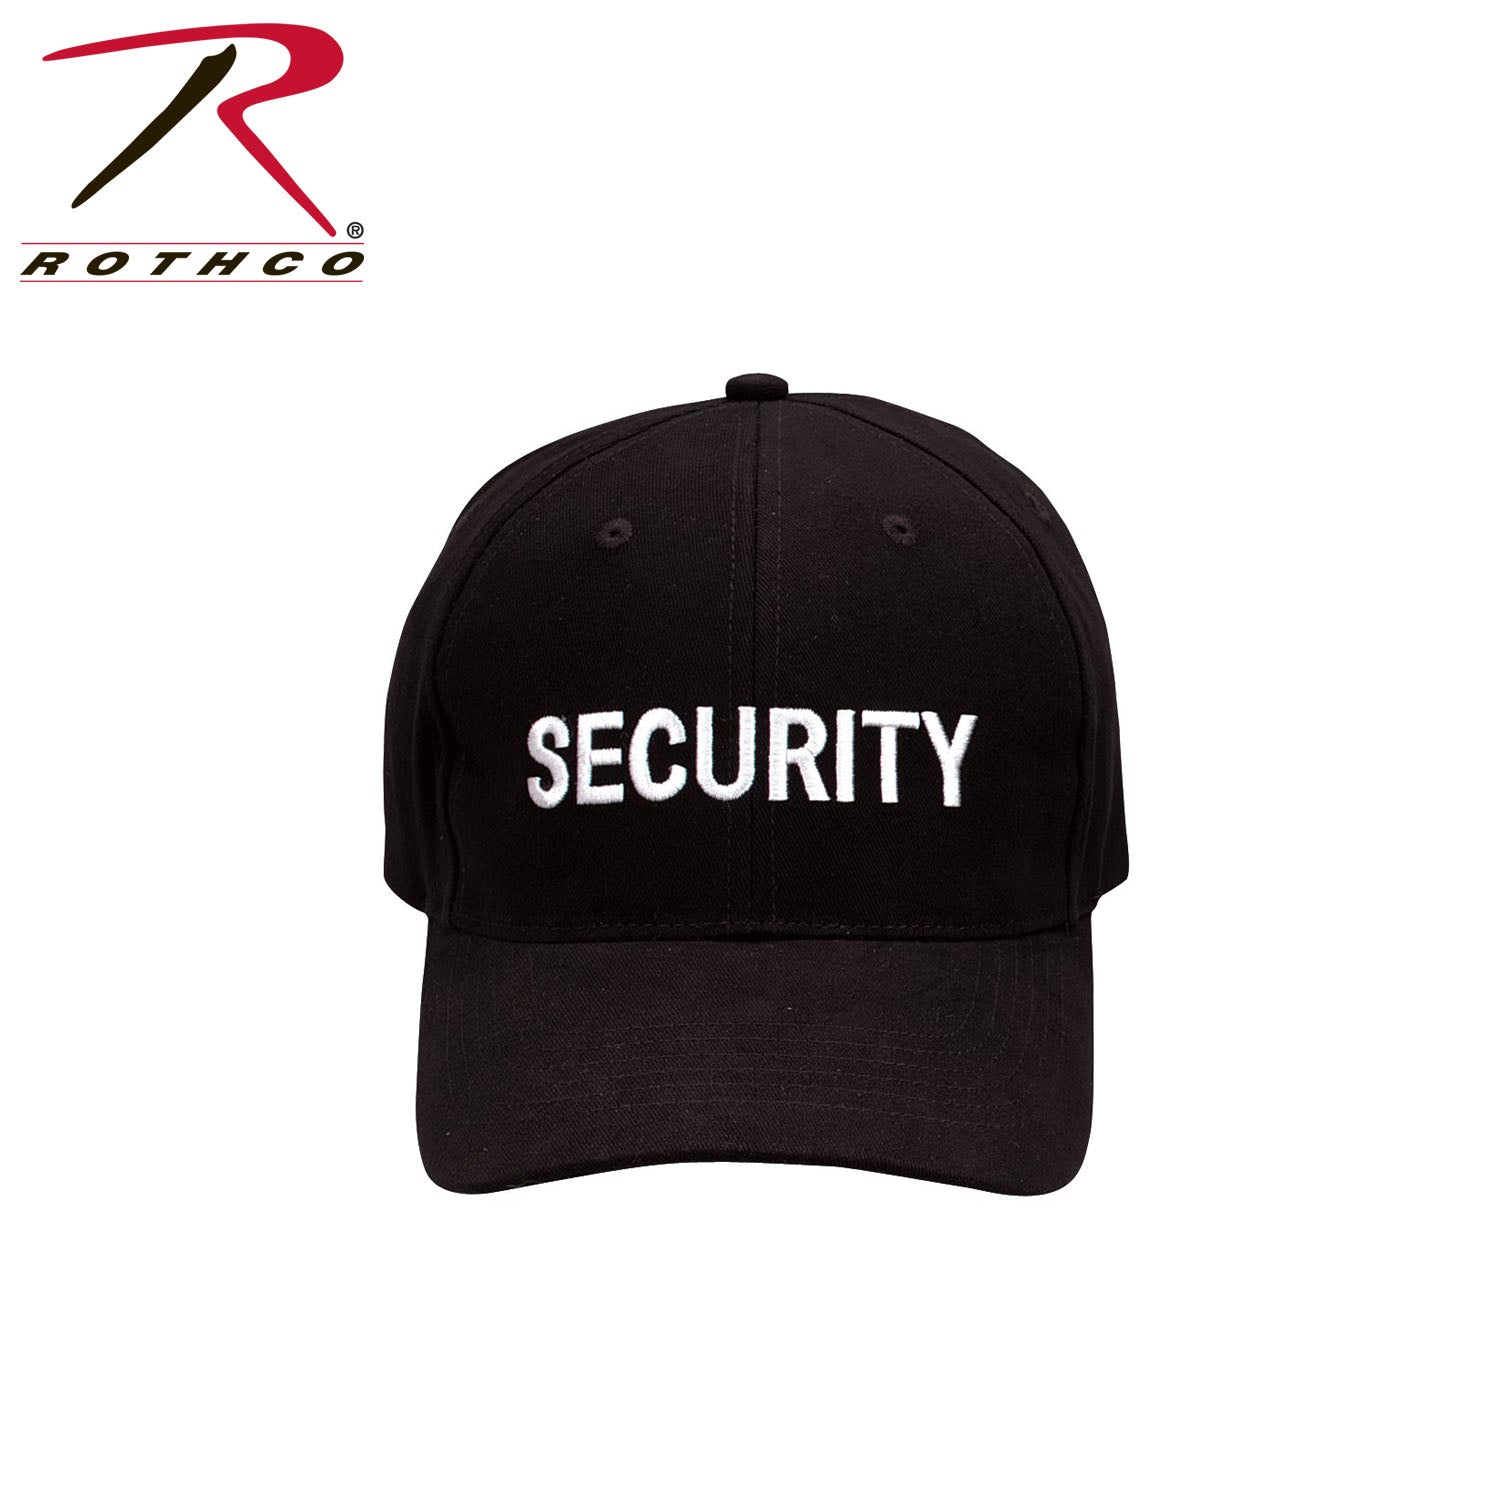 Rothco Security Supreme Low Profile Insignia Cap Black/White